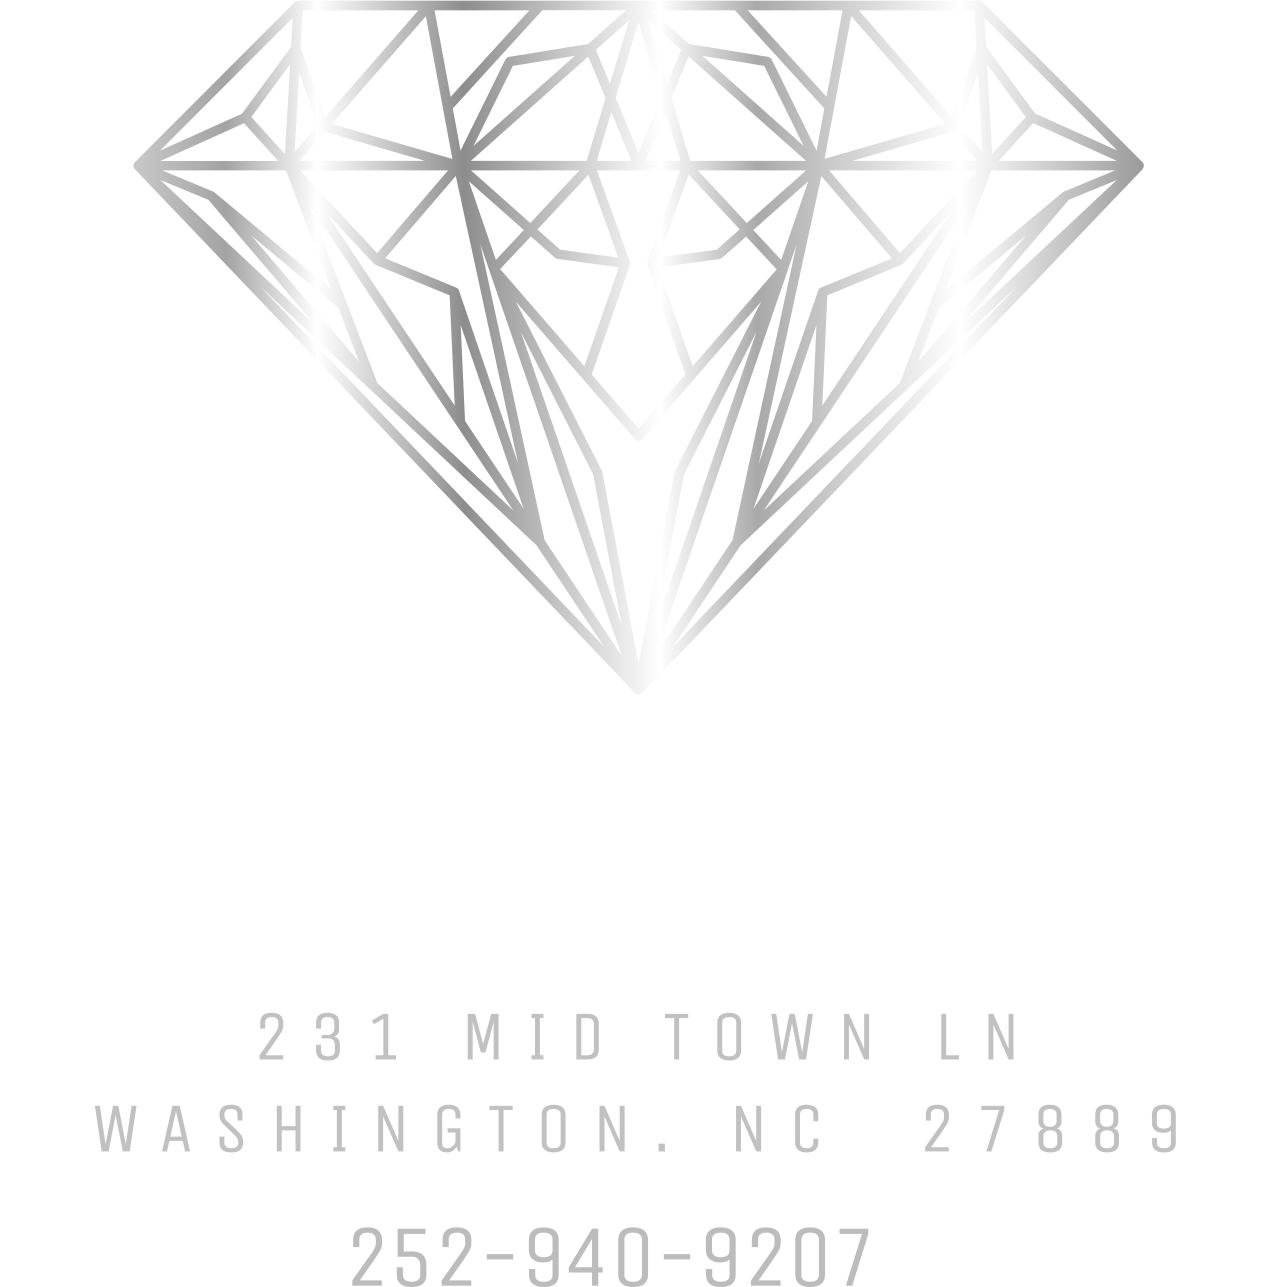 Mckeel's Jewelers's logo